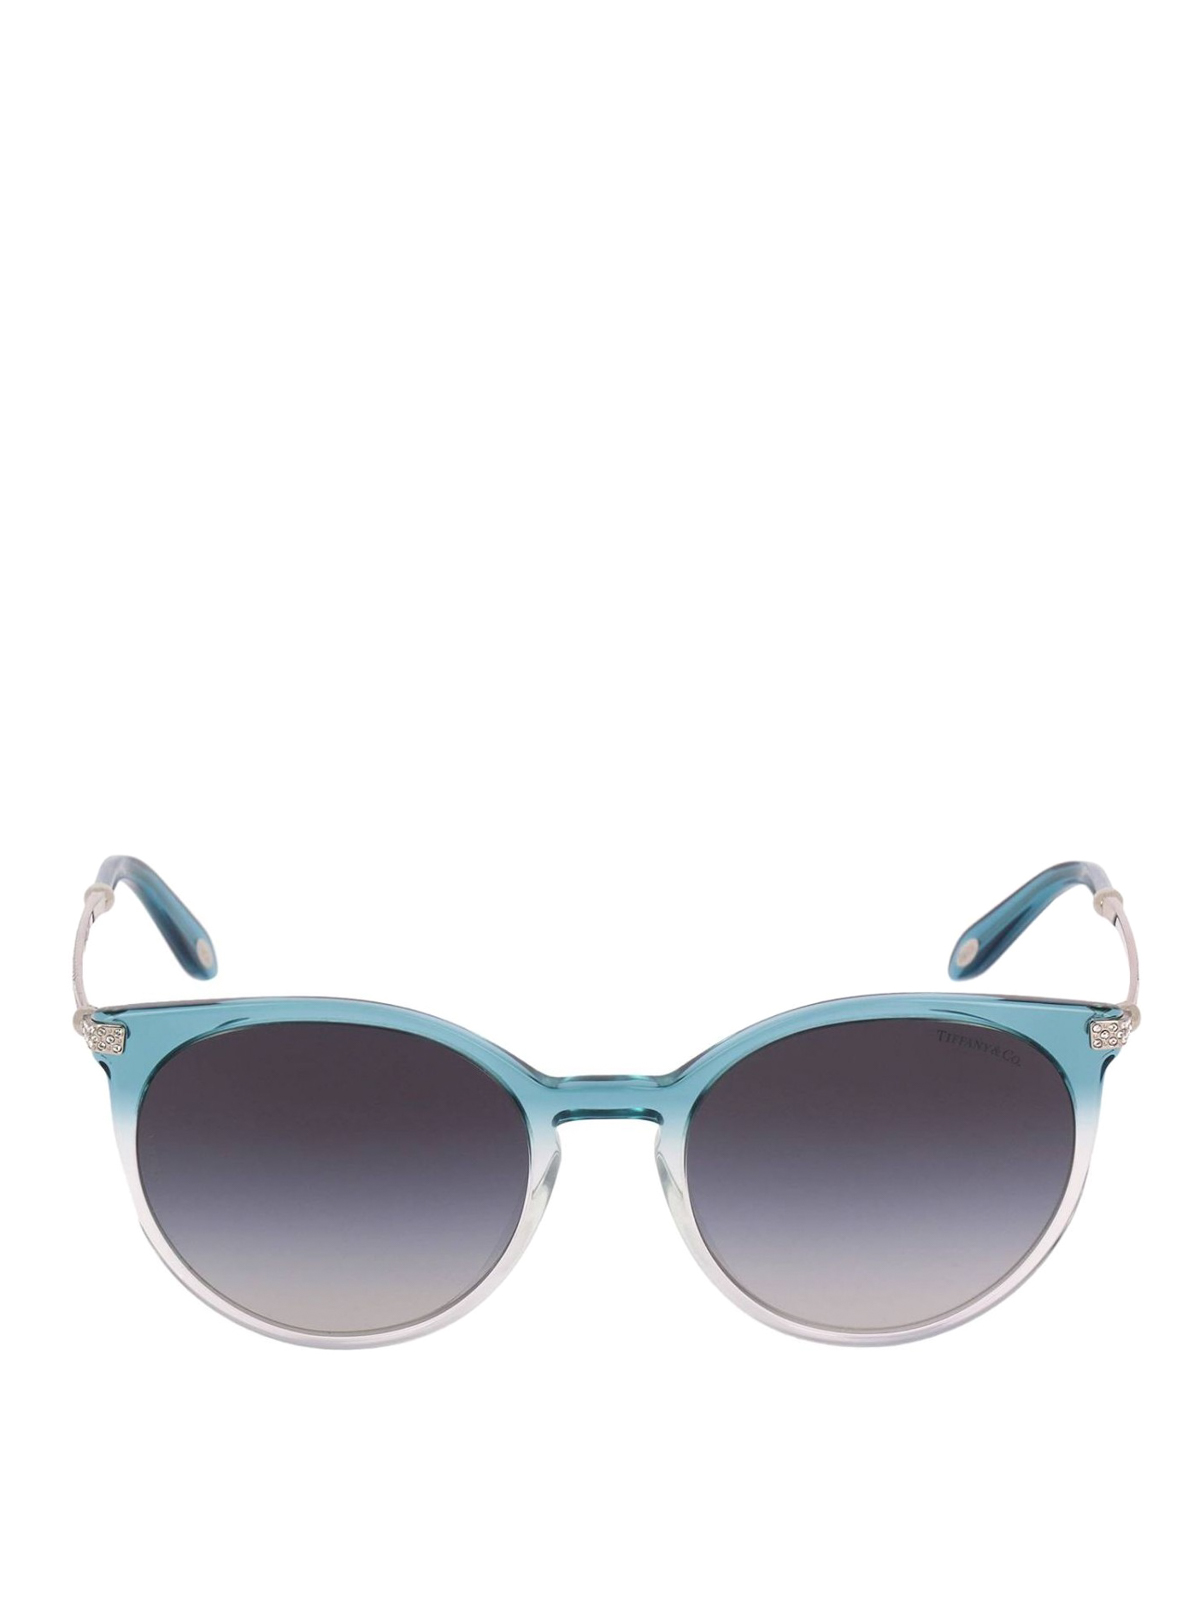 Glasses Tiffany & Co. Crystal embellished Tiffany Blue sunglasses